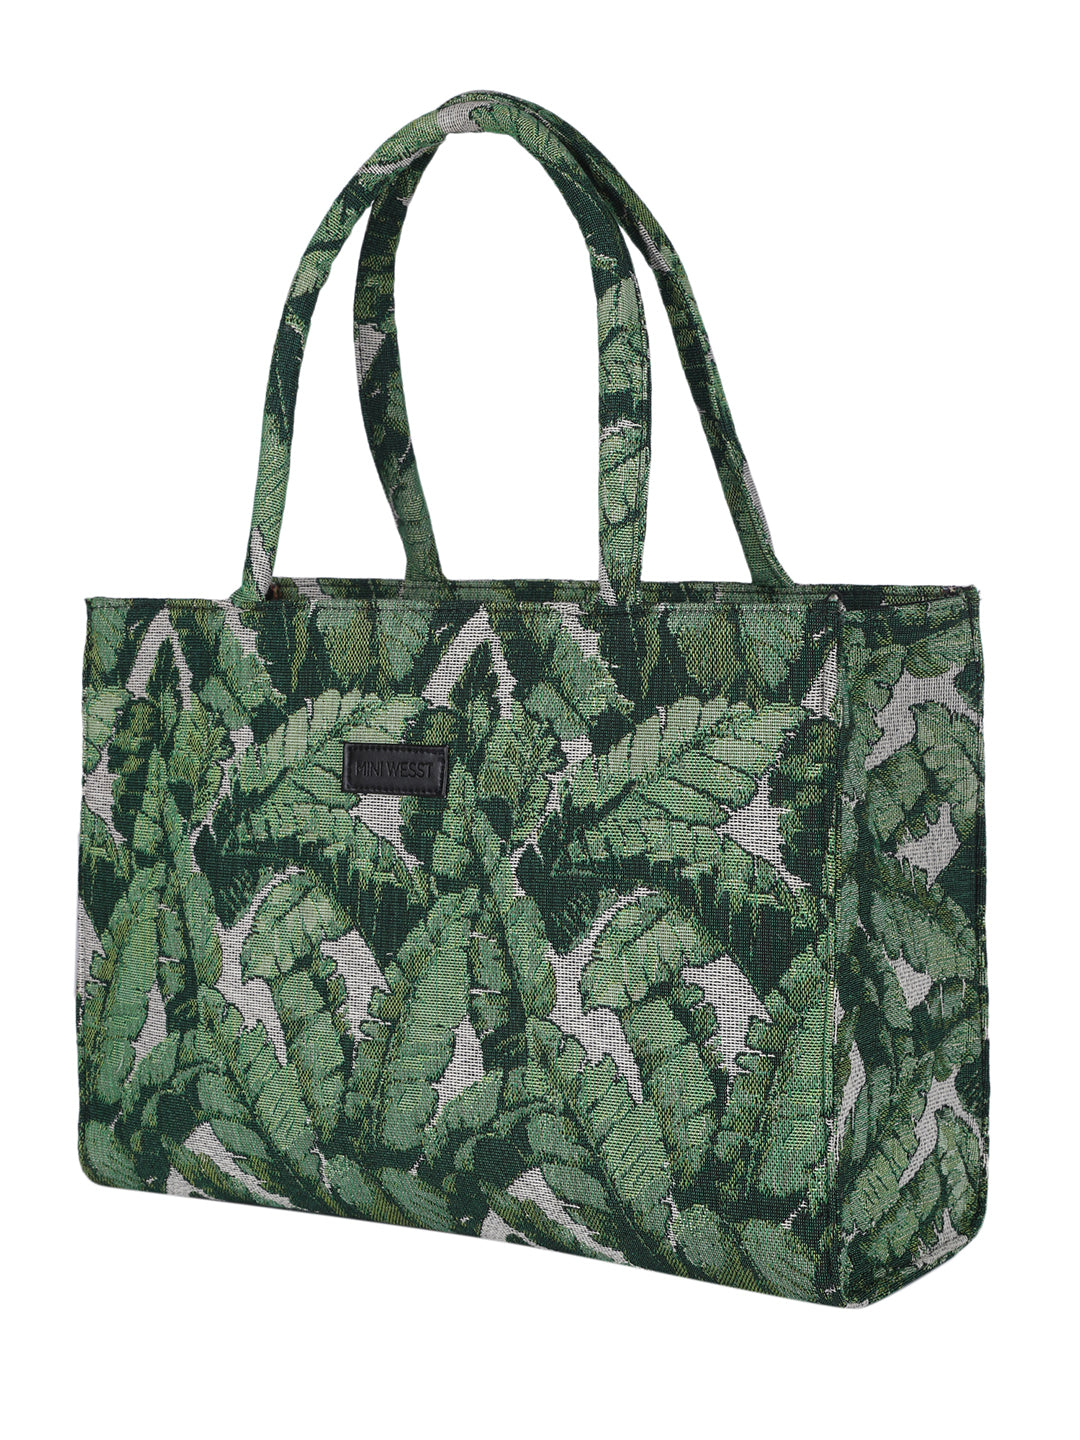 MINI WESST Green Graphic Tote Bag(MWTB121PR)